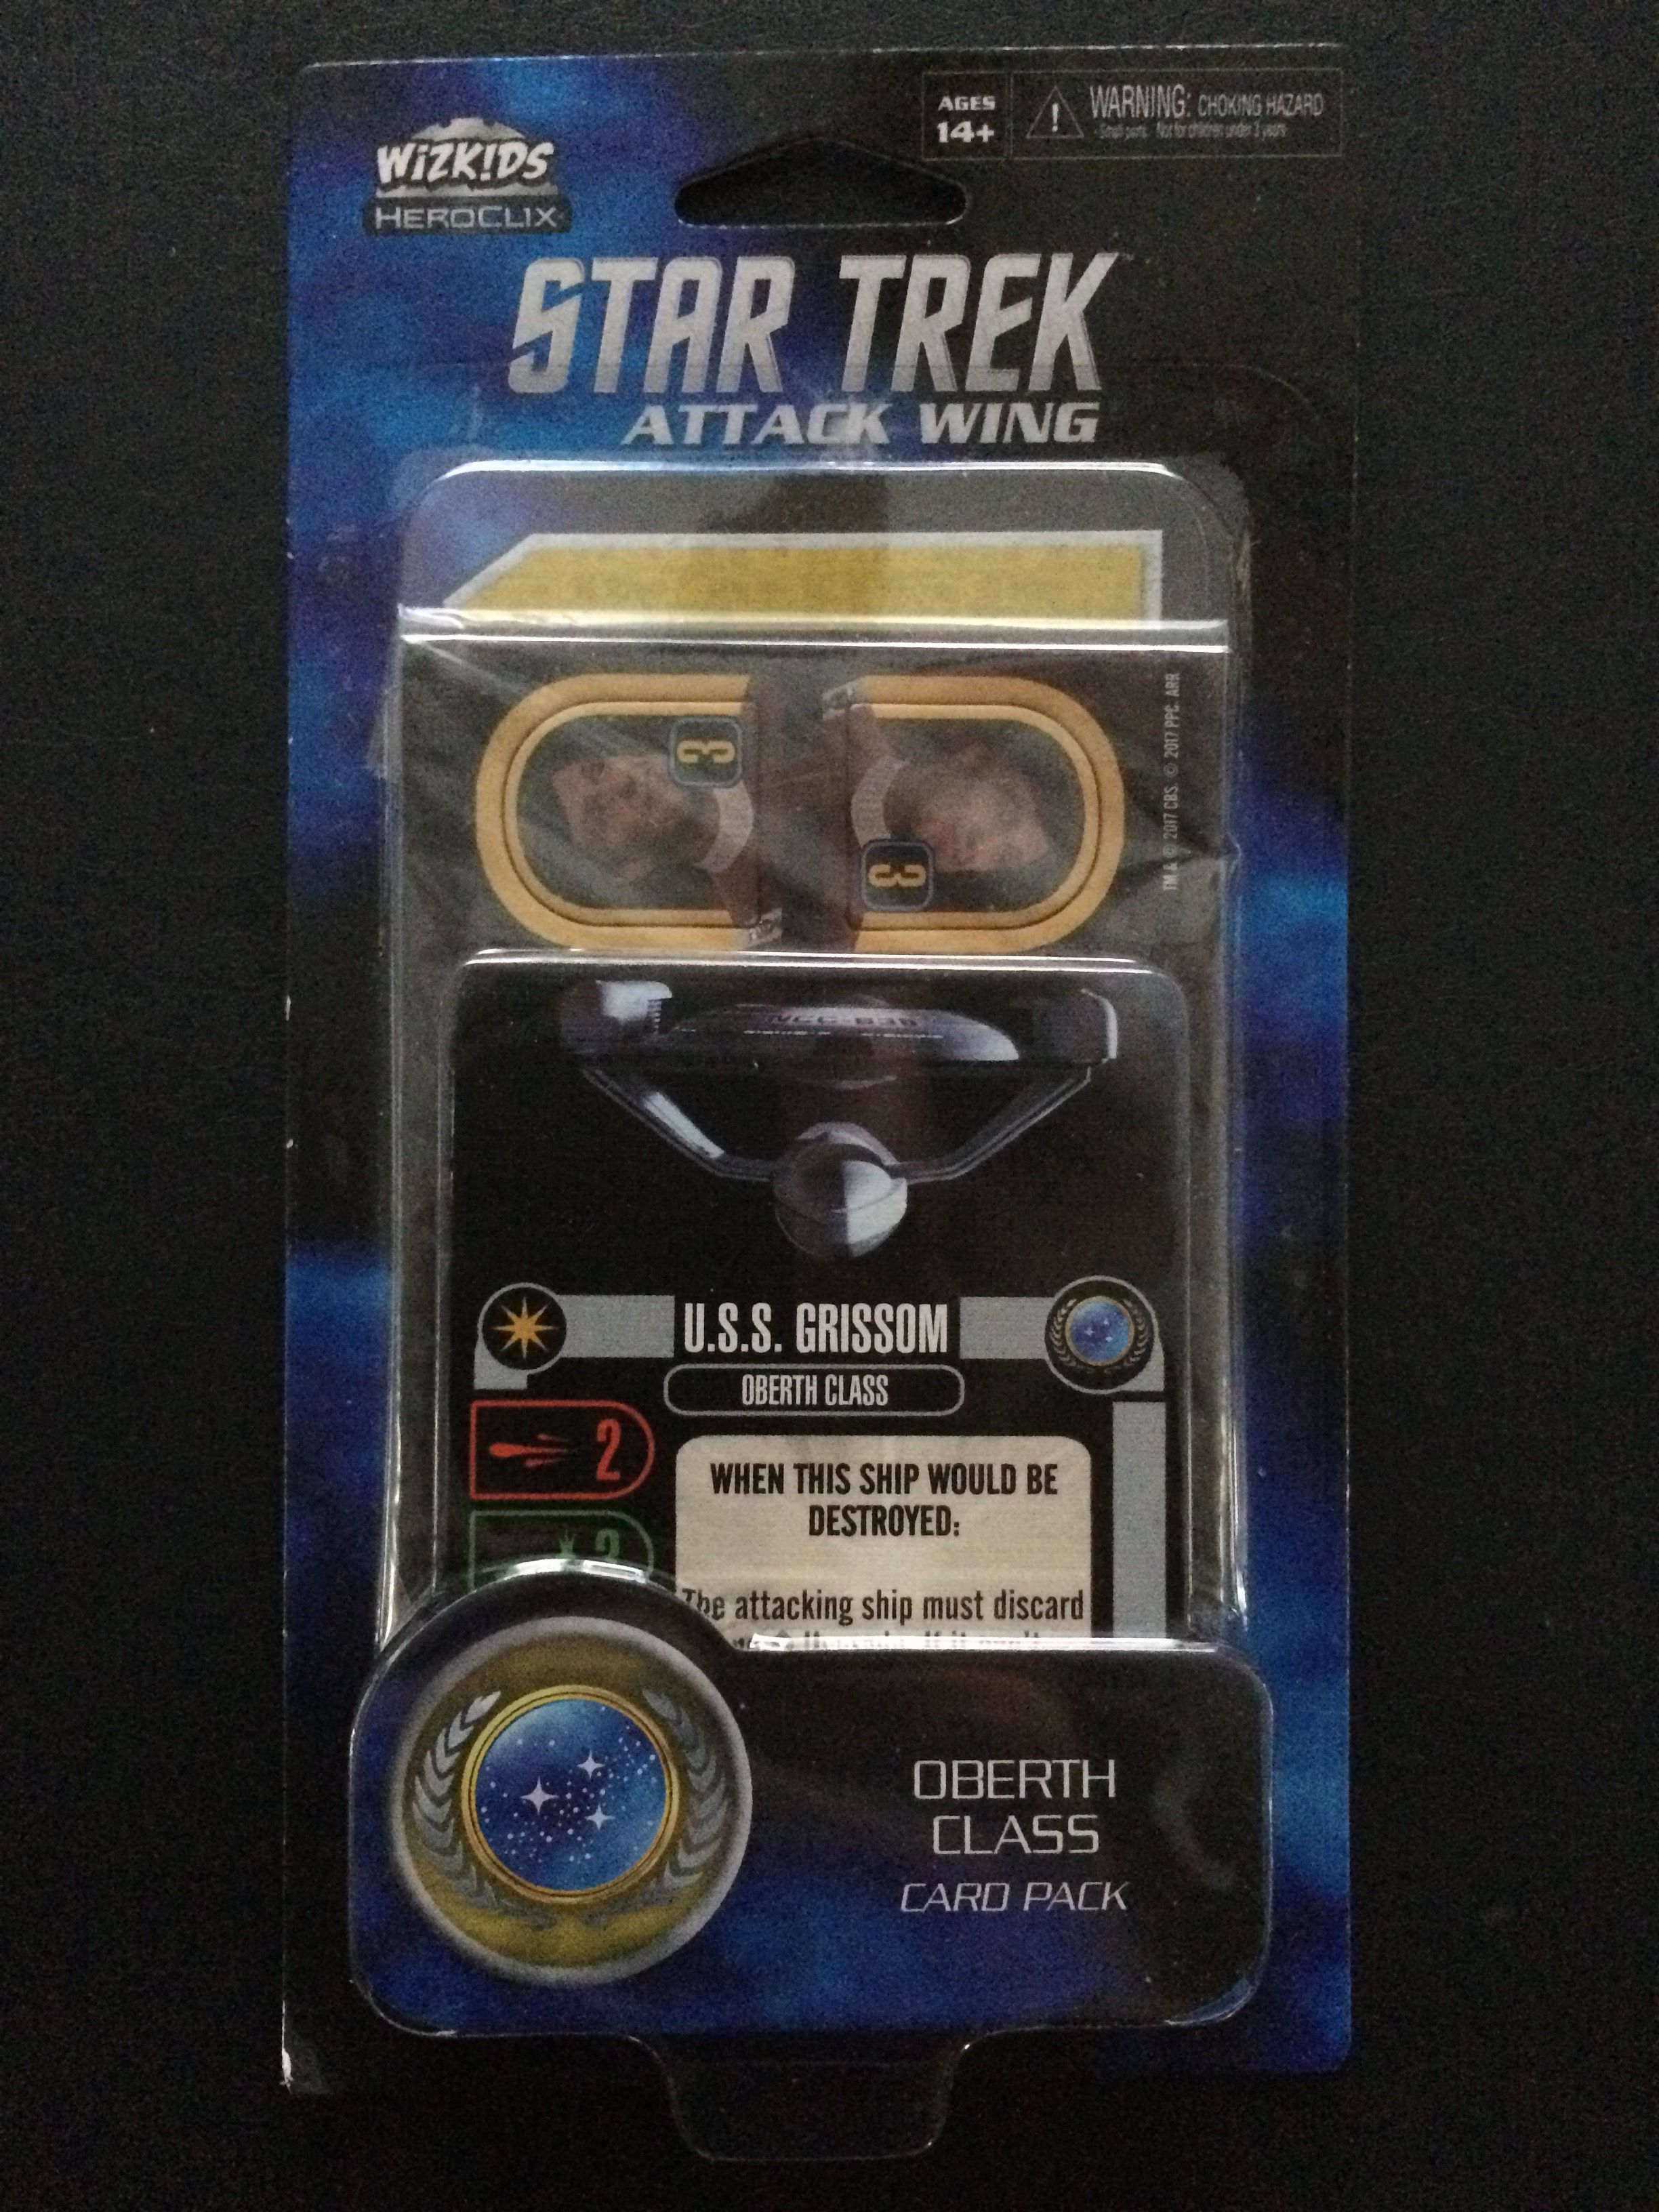 Star Trek: Attack Wing – Oberth Class Card Pack